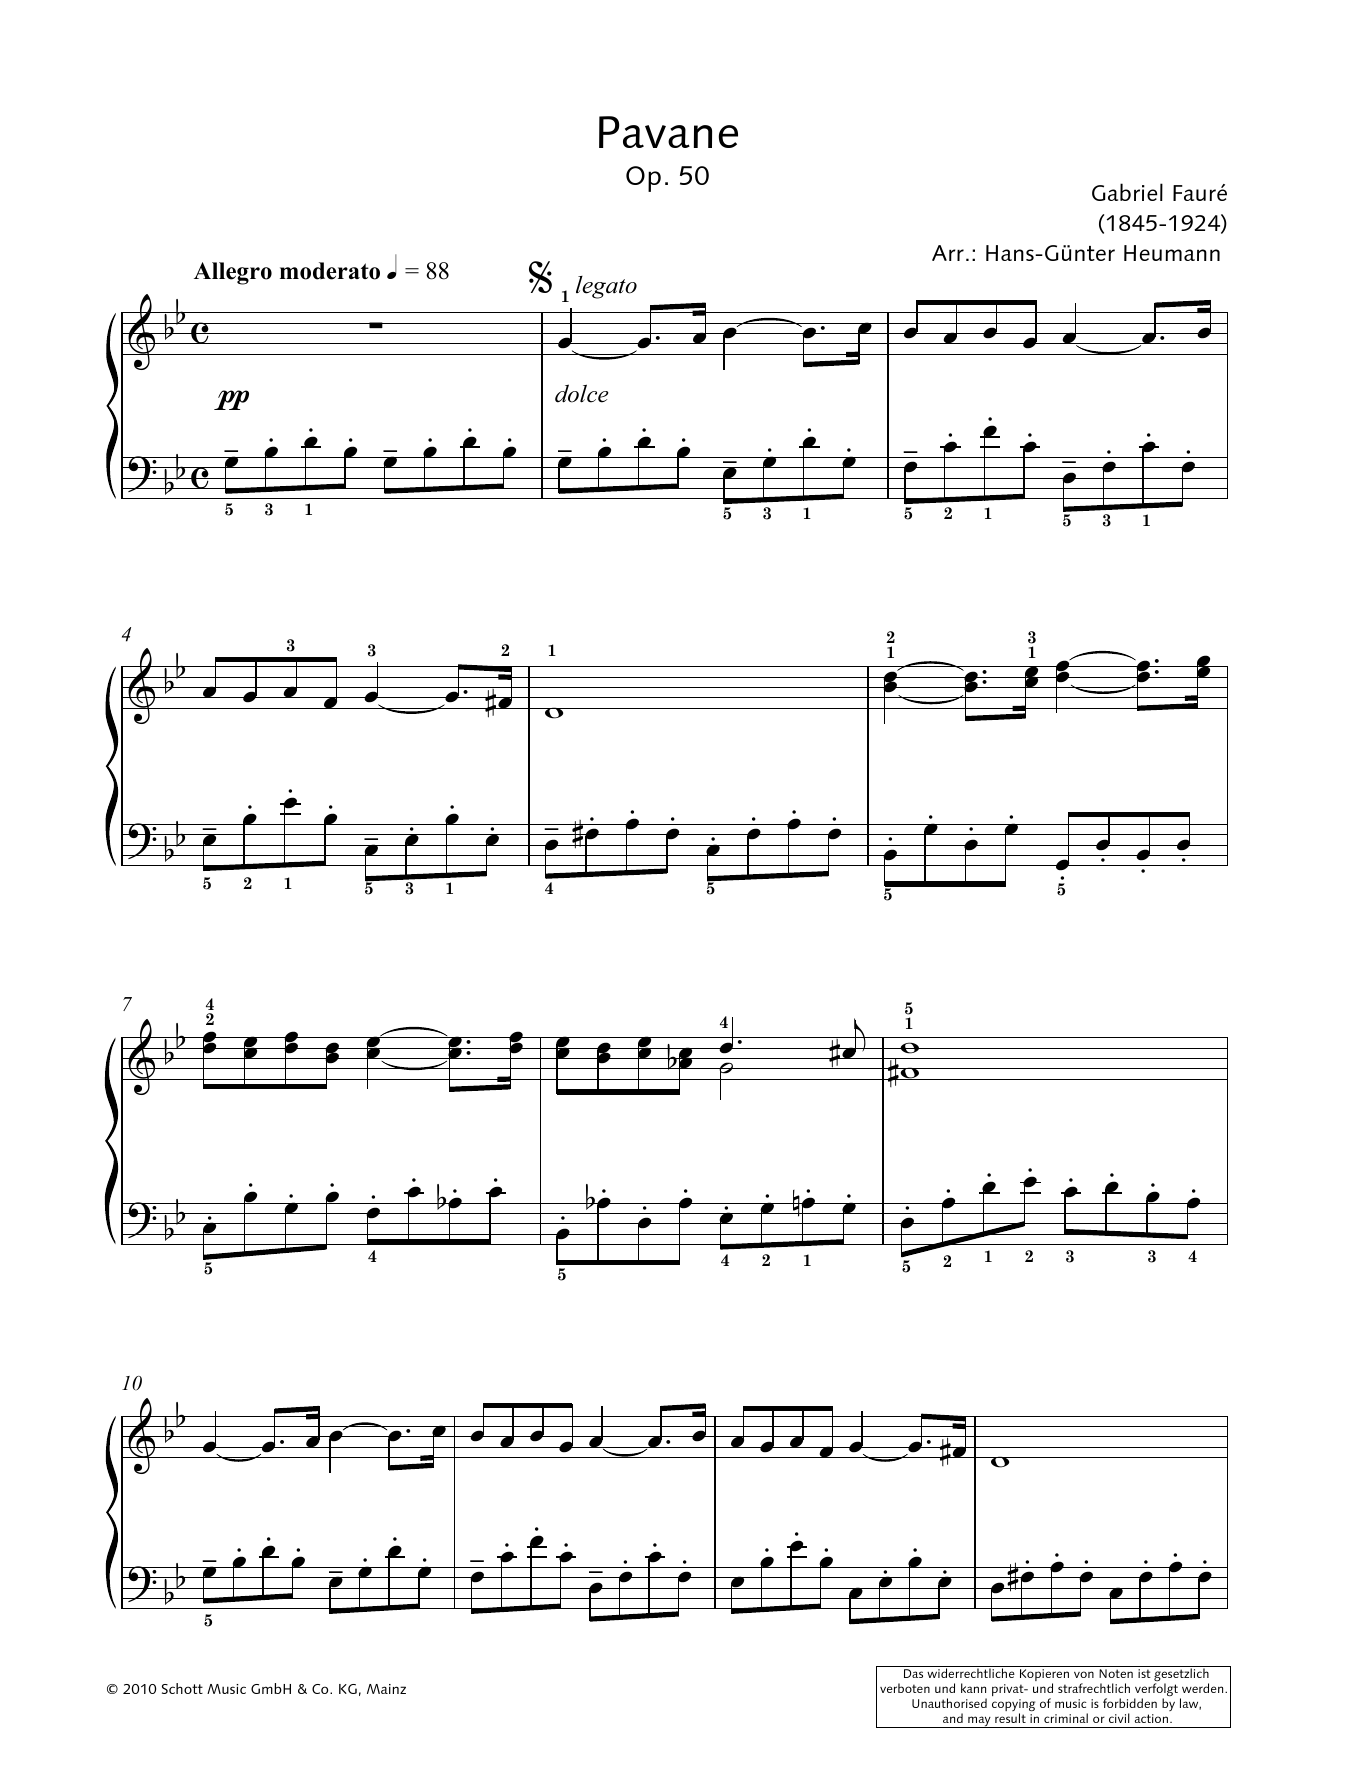 Hans-Gunter Heumann Pavane Sheet Music Notes & Chords for Piano Solo - Download or Print PDF